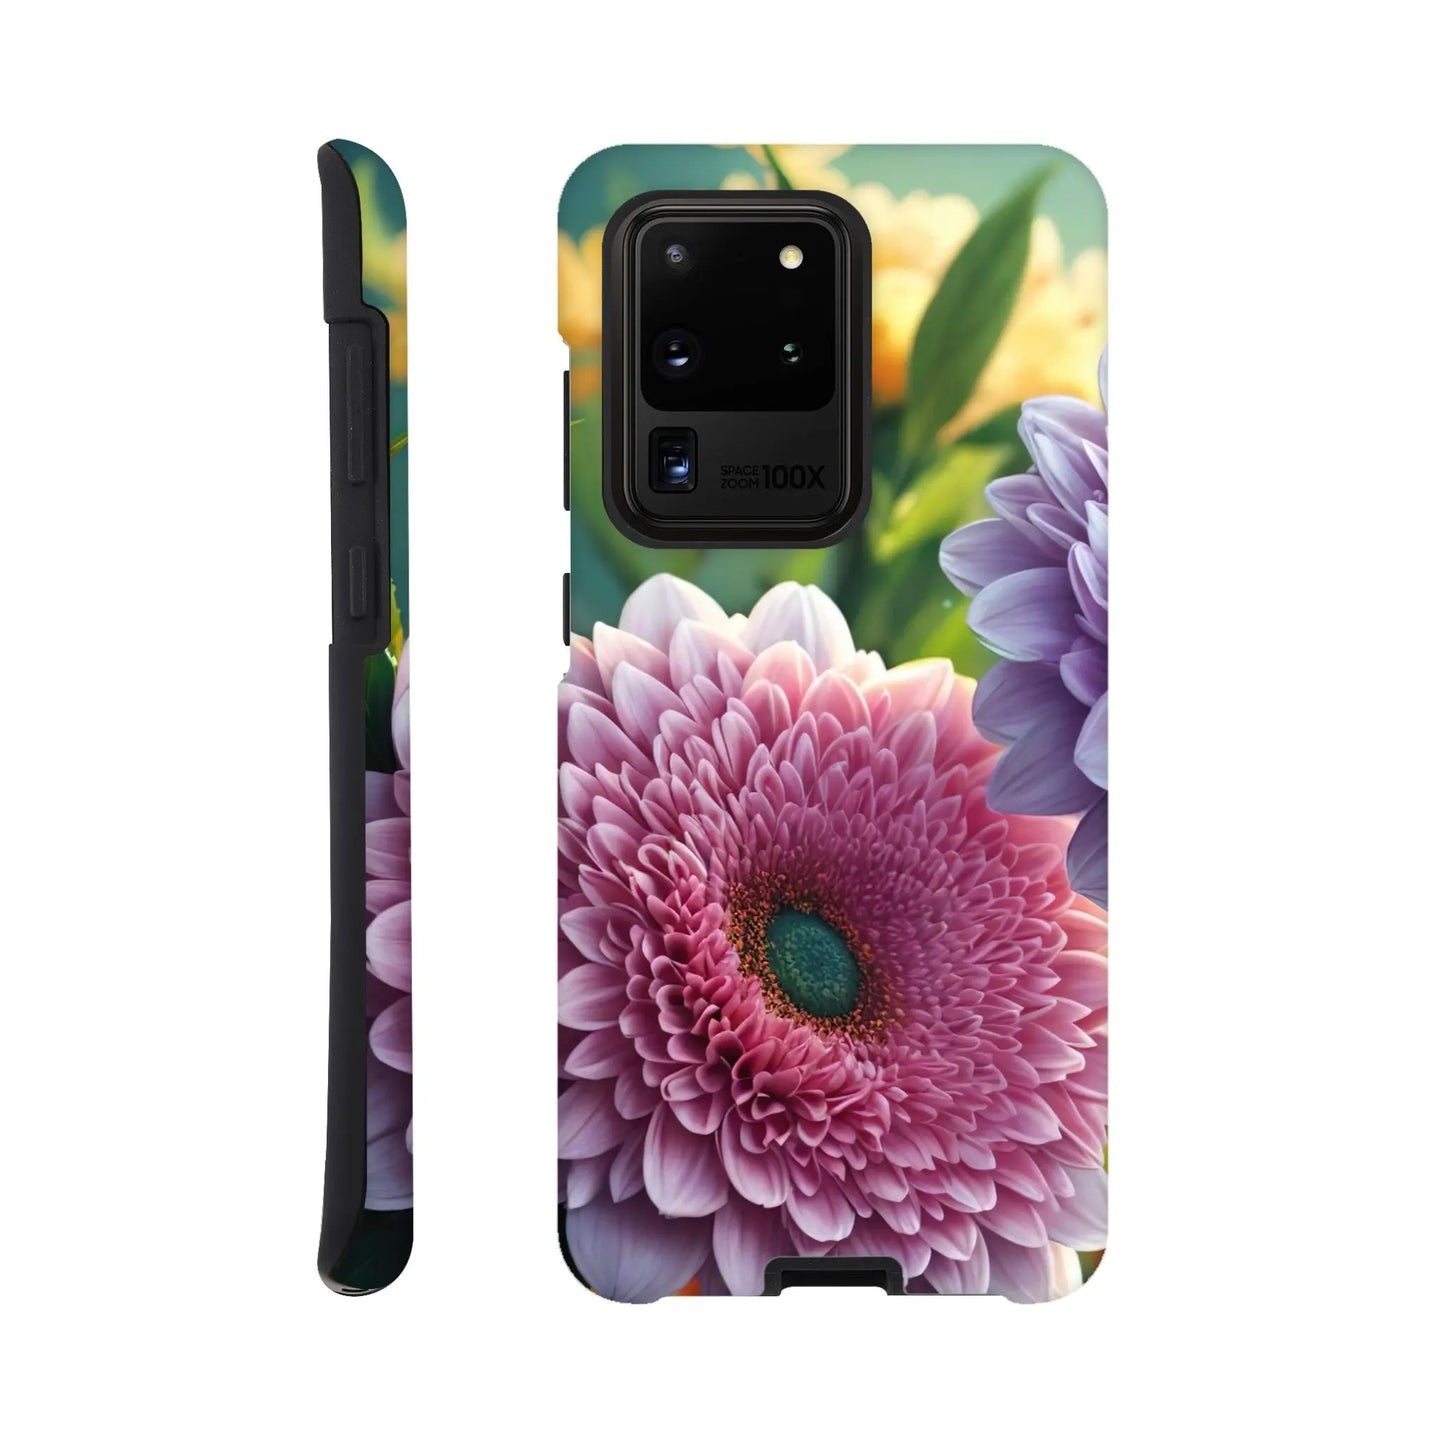 Smartphone-Hülle "Hart" - Blumen Vielfalt - Foto Stil, KI-Kunst, Pflanzen, Galaxy-S20-Ultra - RolConArt